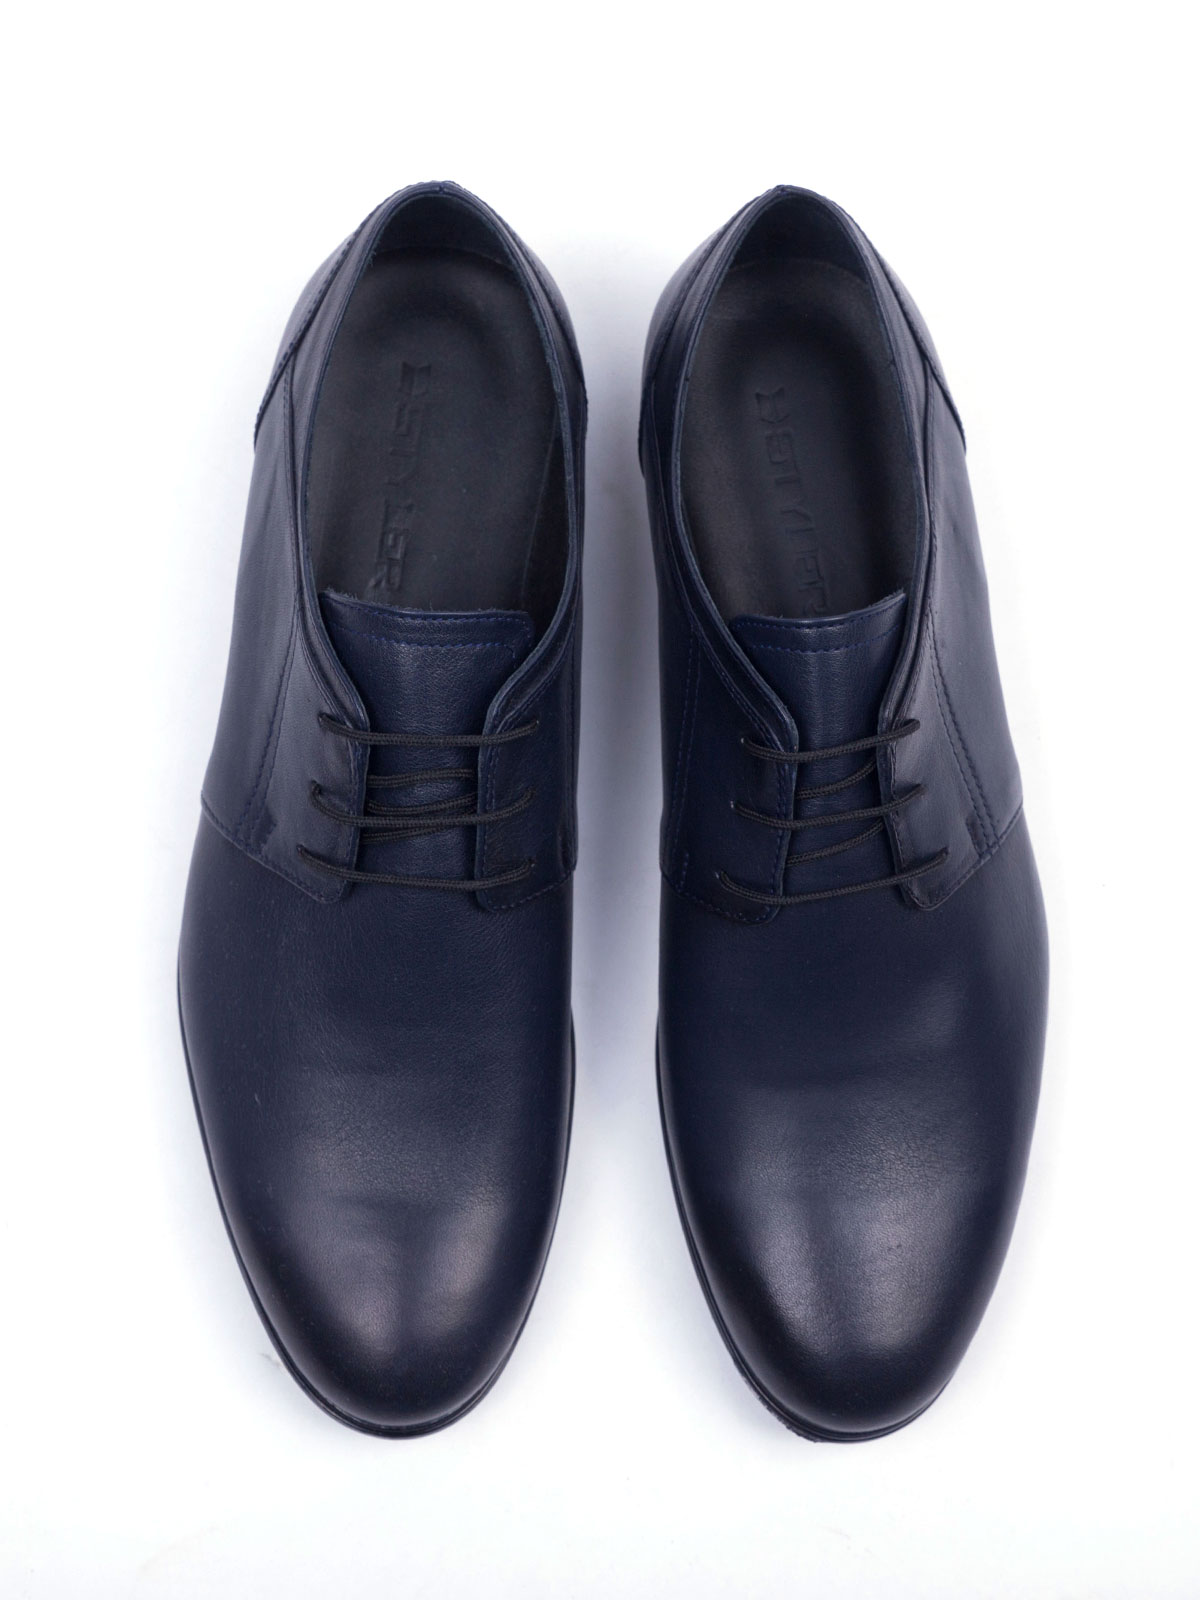 Dark blue shoes - 81054 - € 50.06 img2